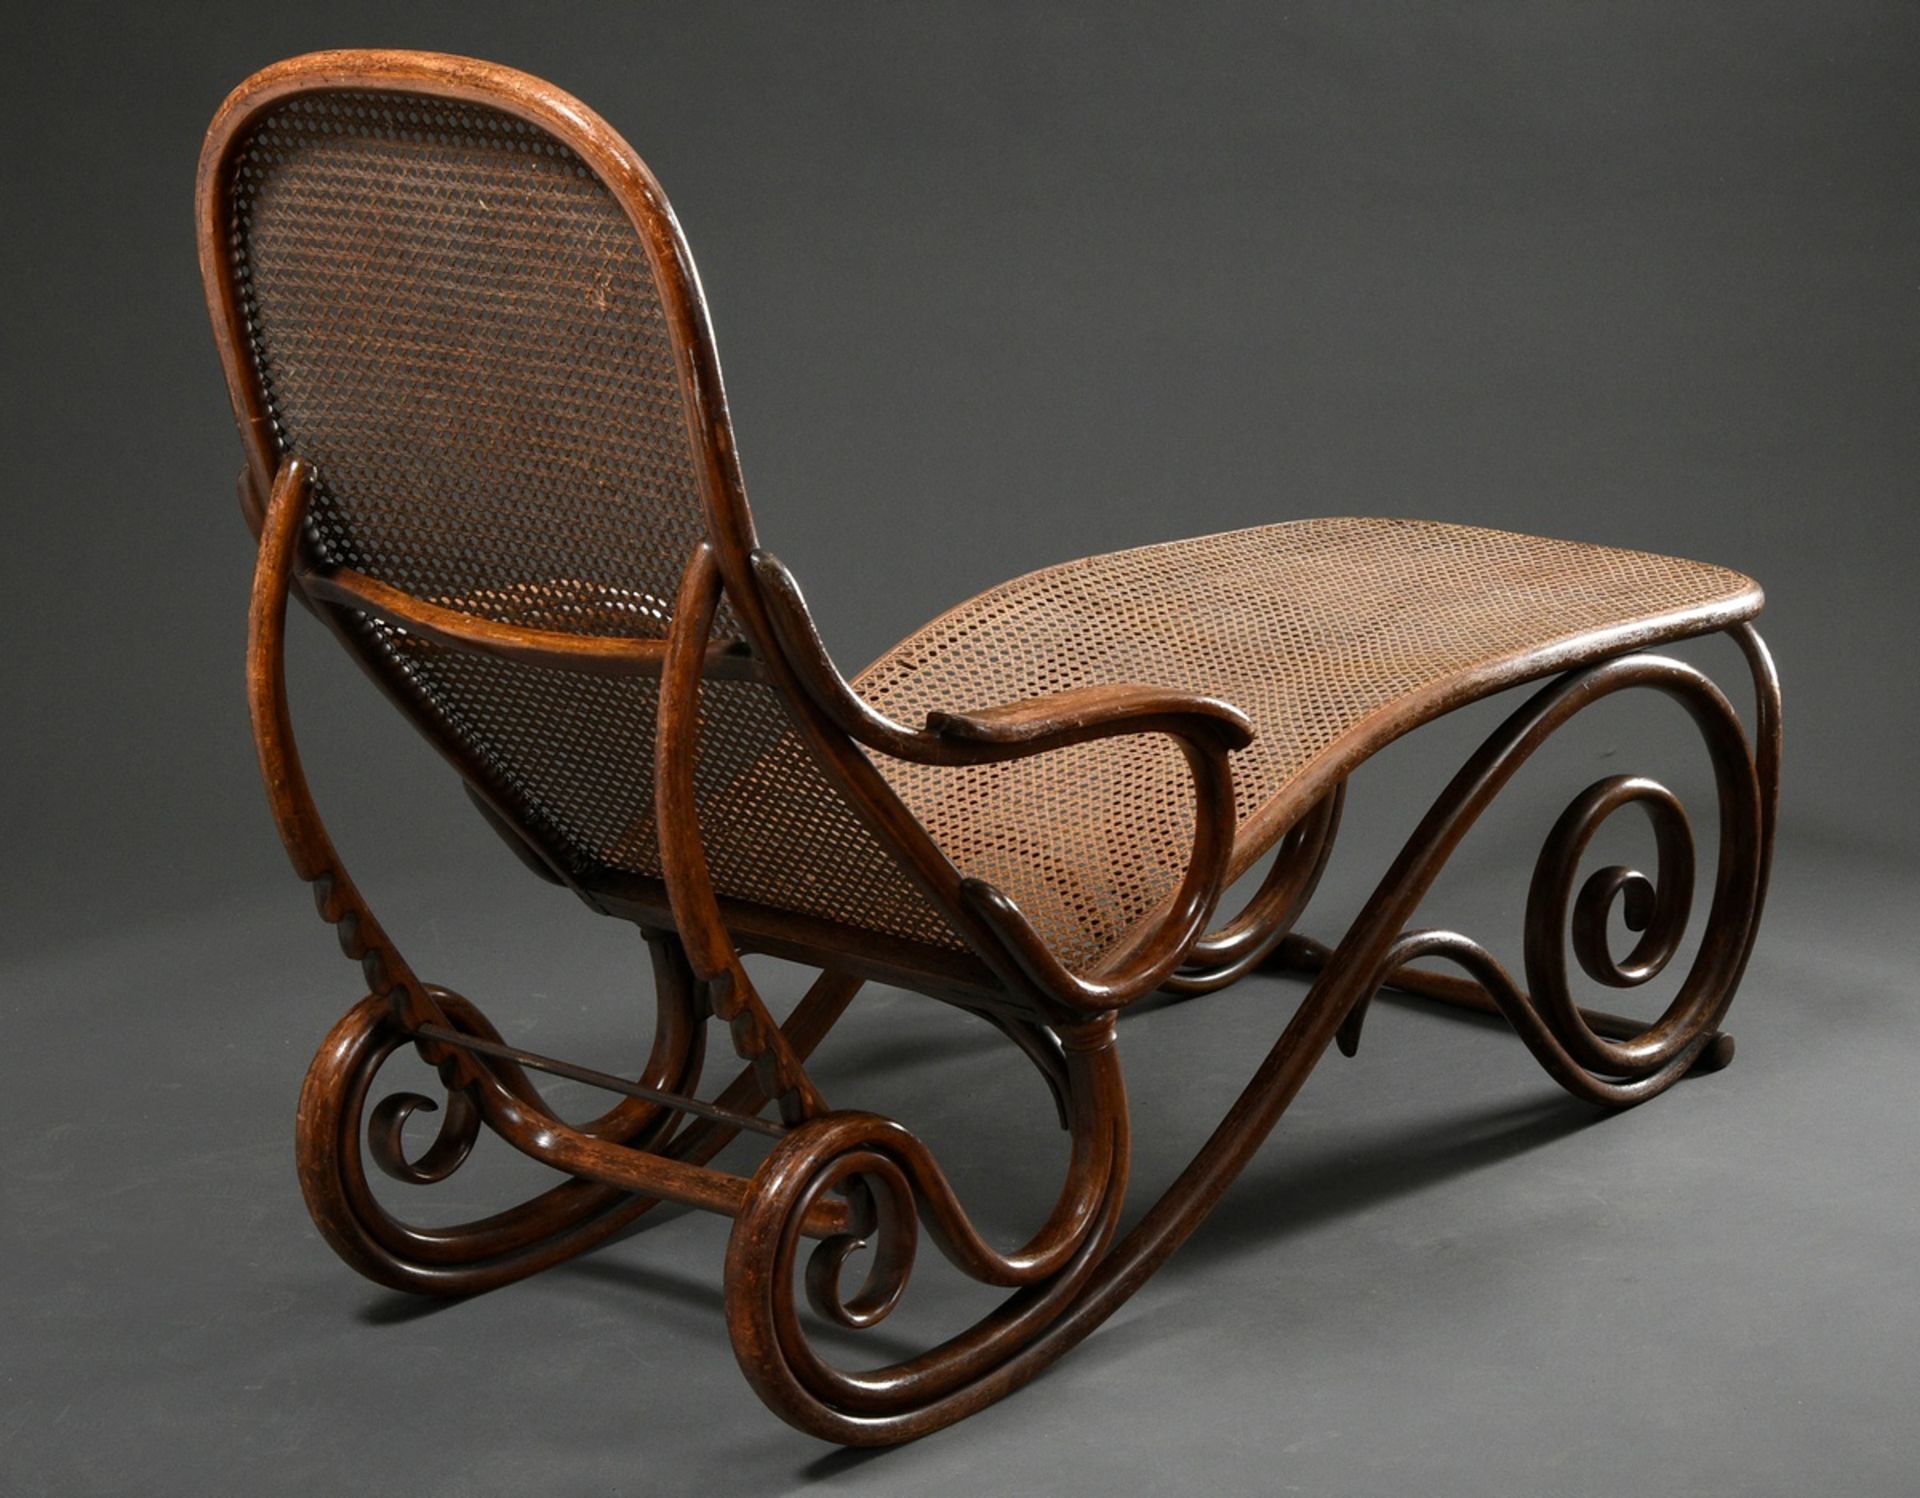 Thonet "Sofa bed no. 2", design: Gebrüder Thonet, Vienna c. 1900, solid bent beech wood with wicker - Image 4 of 7